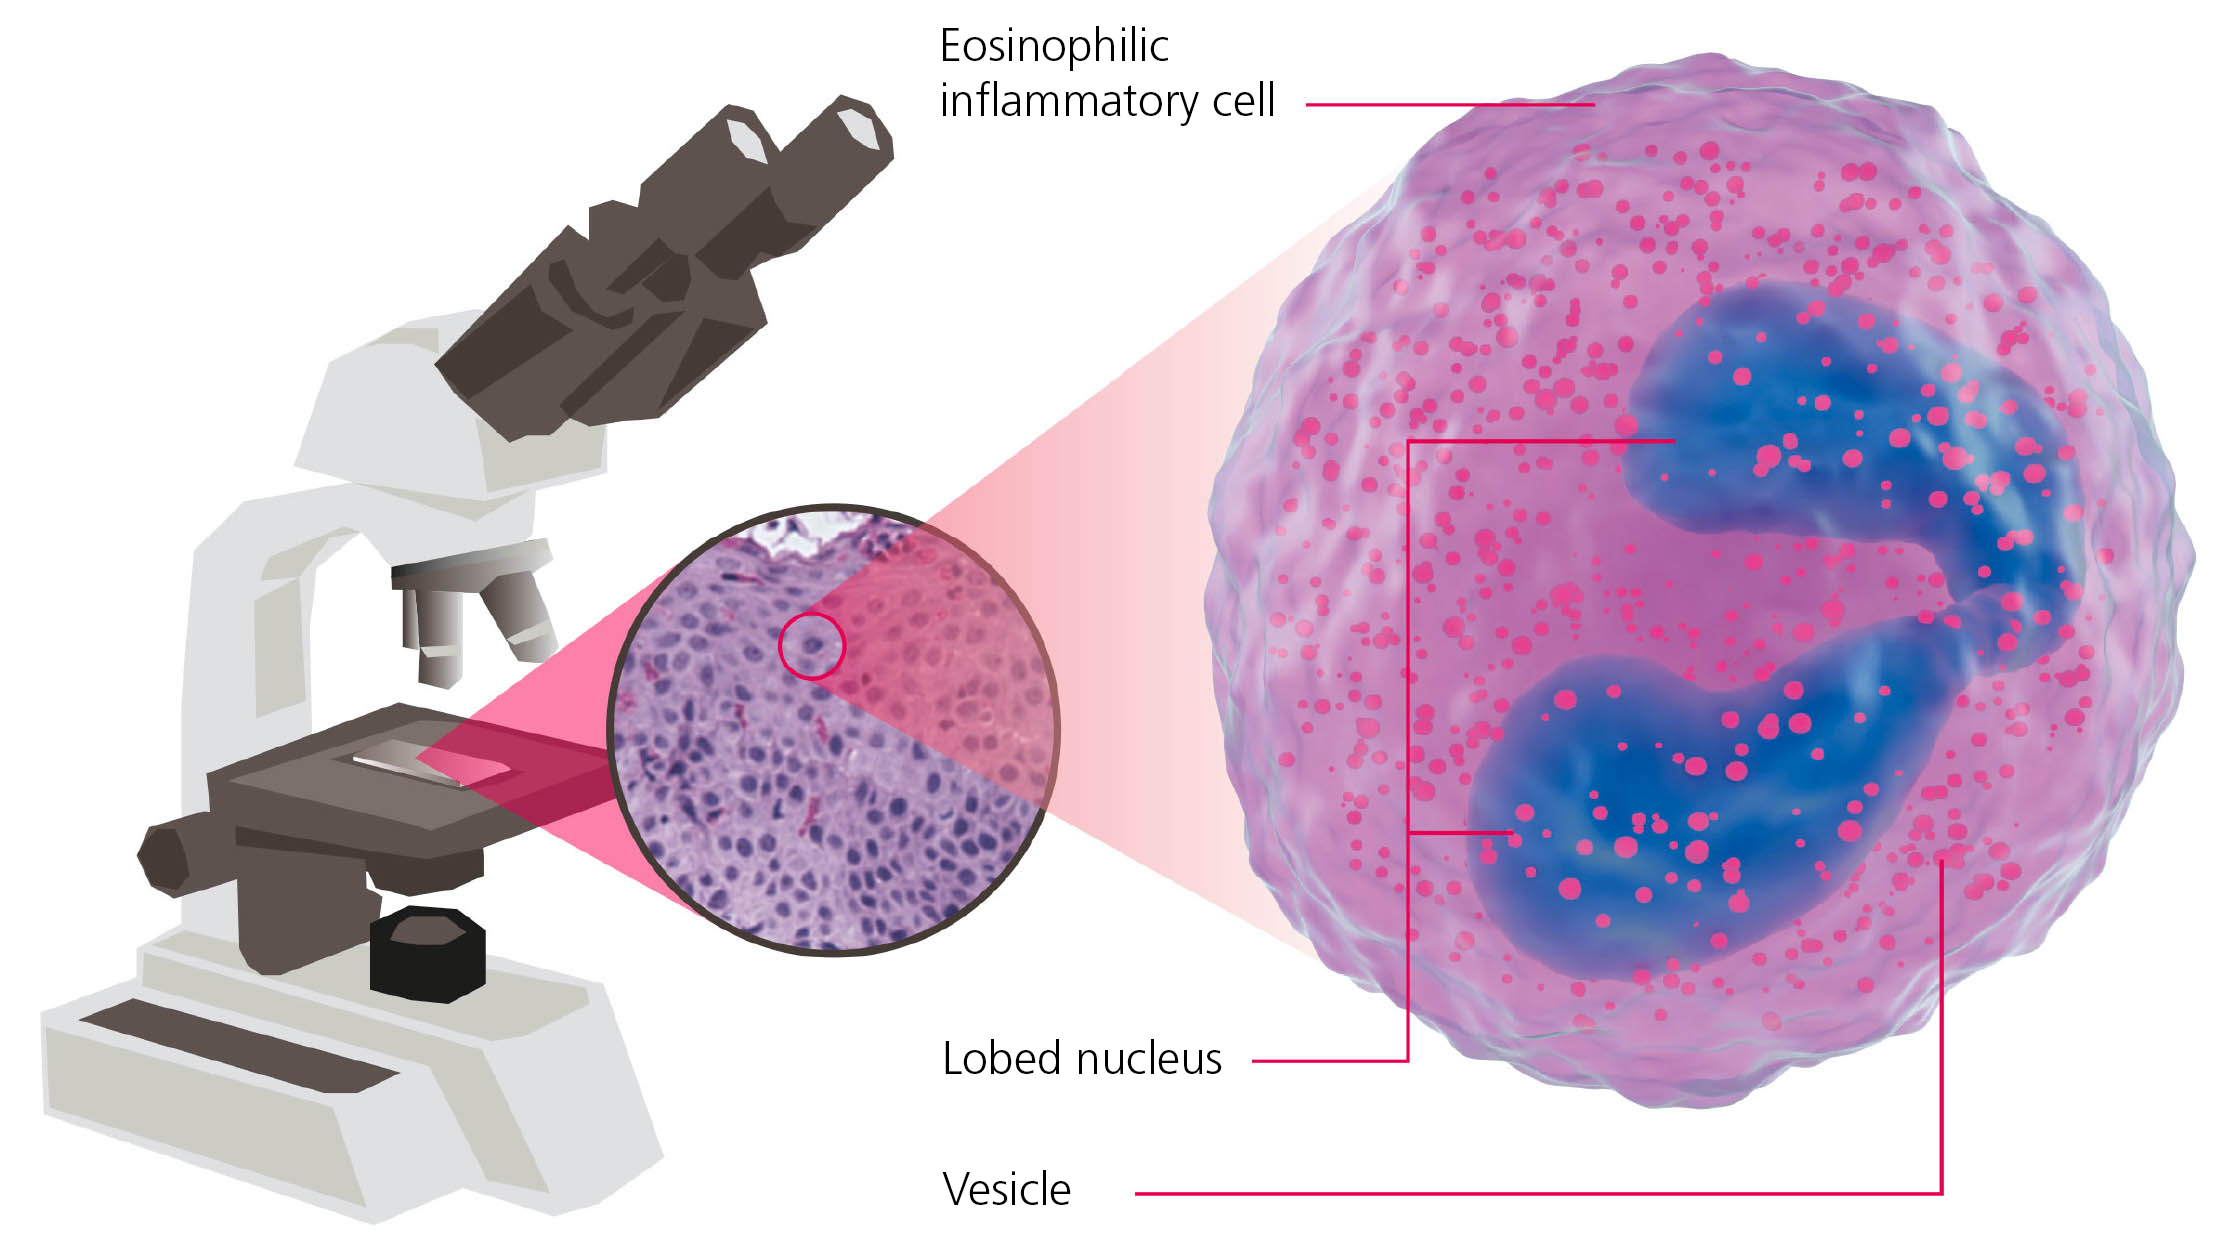 Eosinophilic inflammatory cell